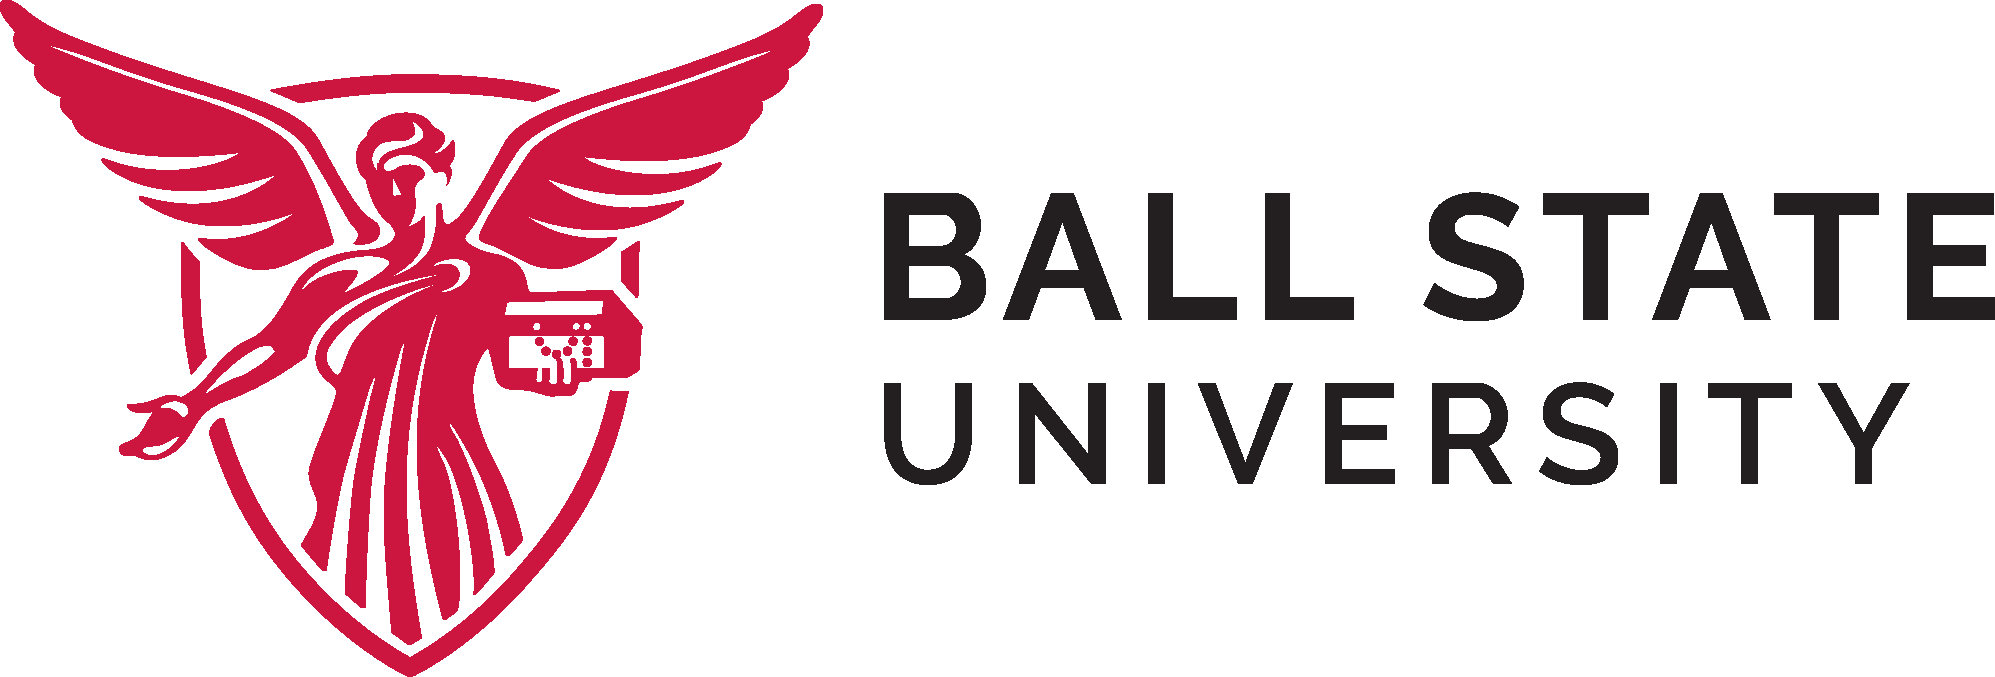 ball-state-logo-university.png